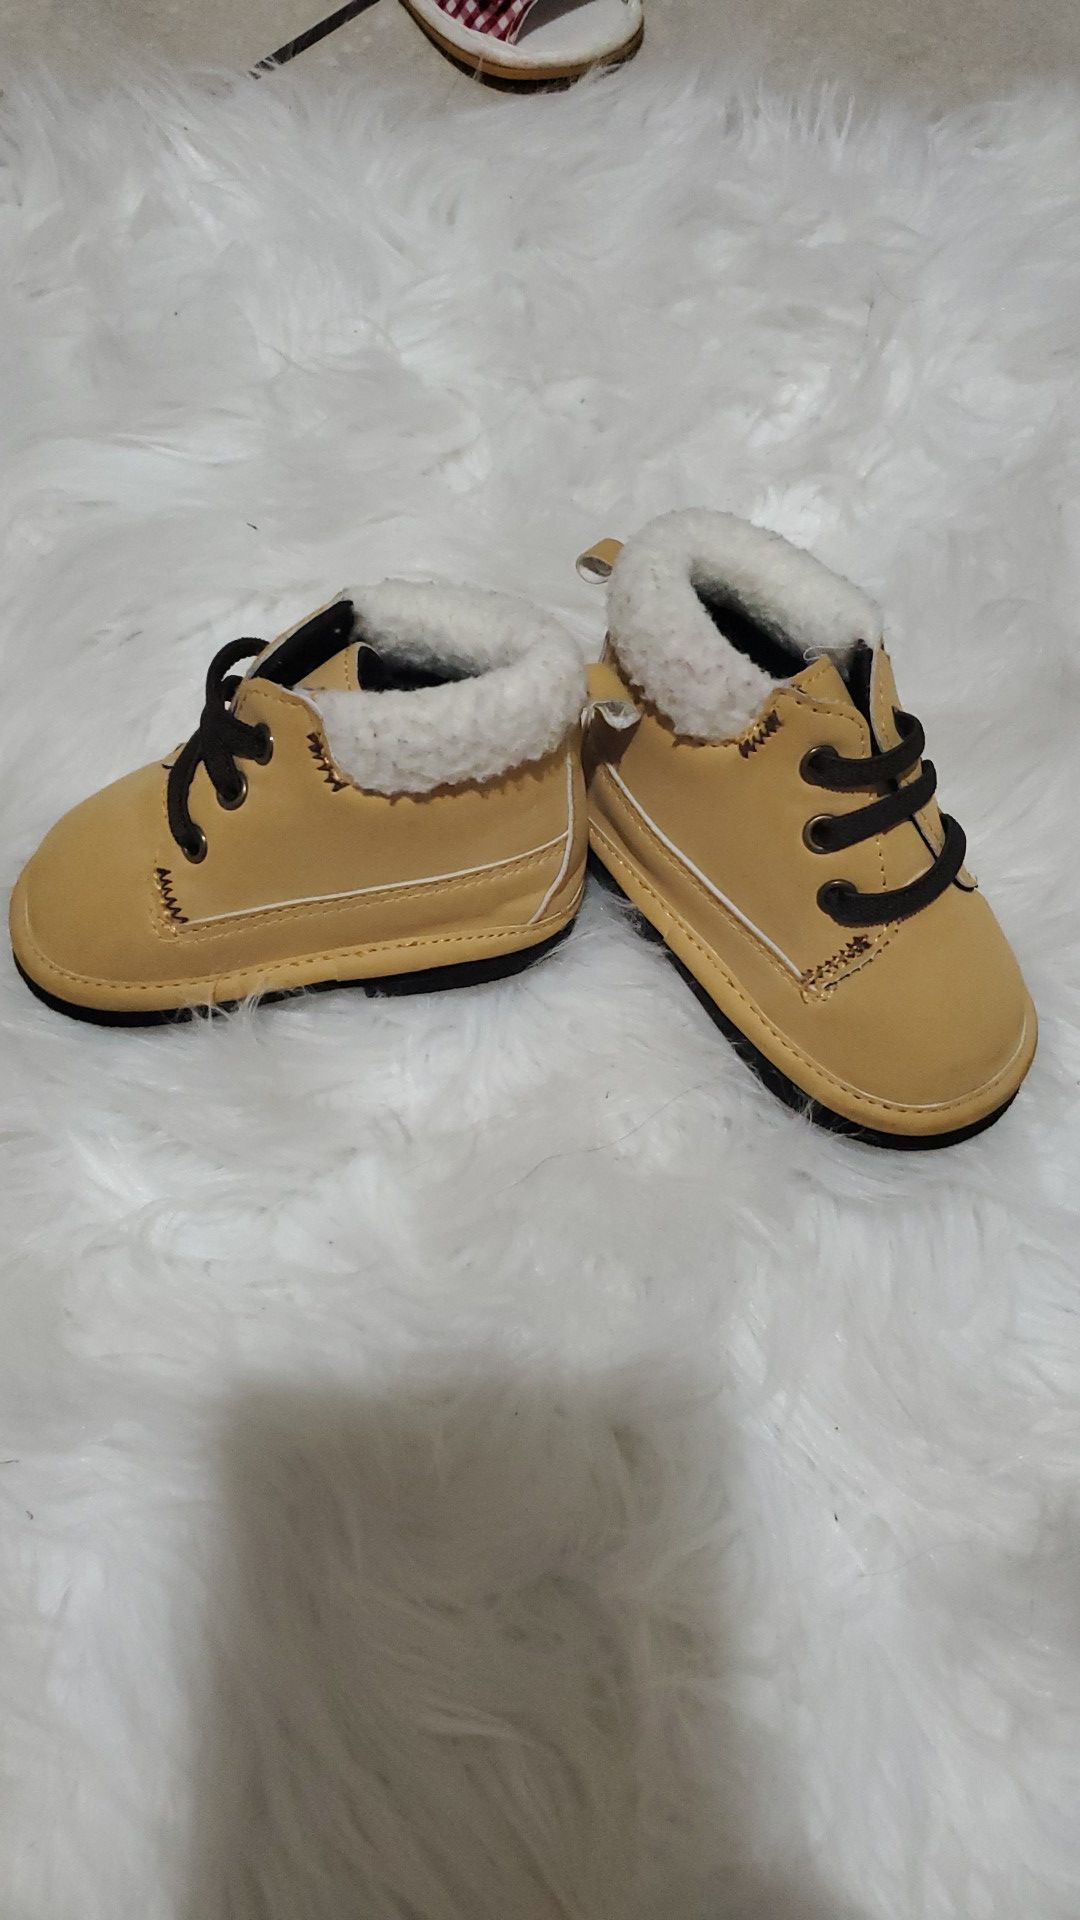 Boy/girl winter boots size 9-12 months.